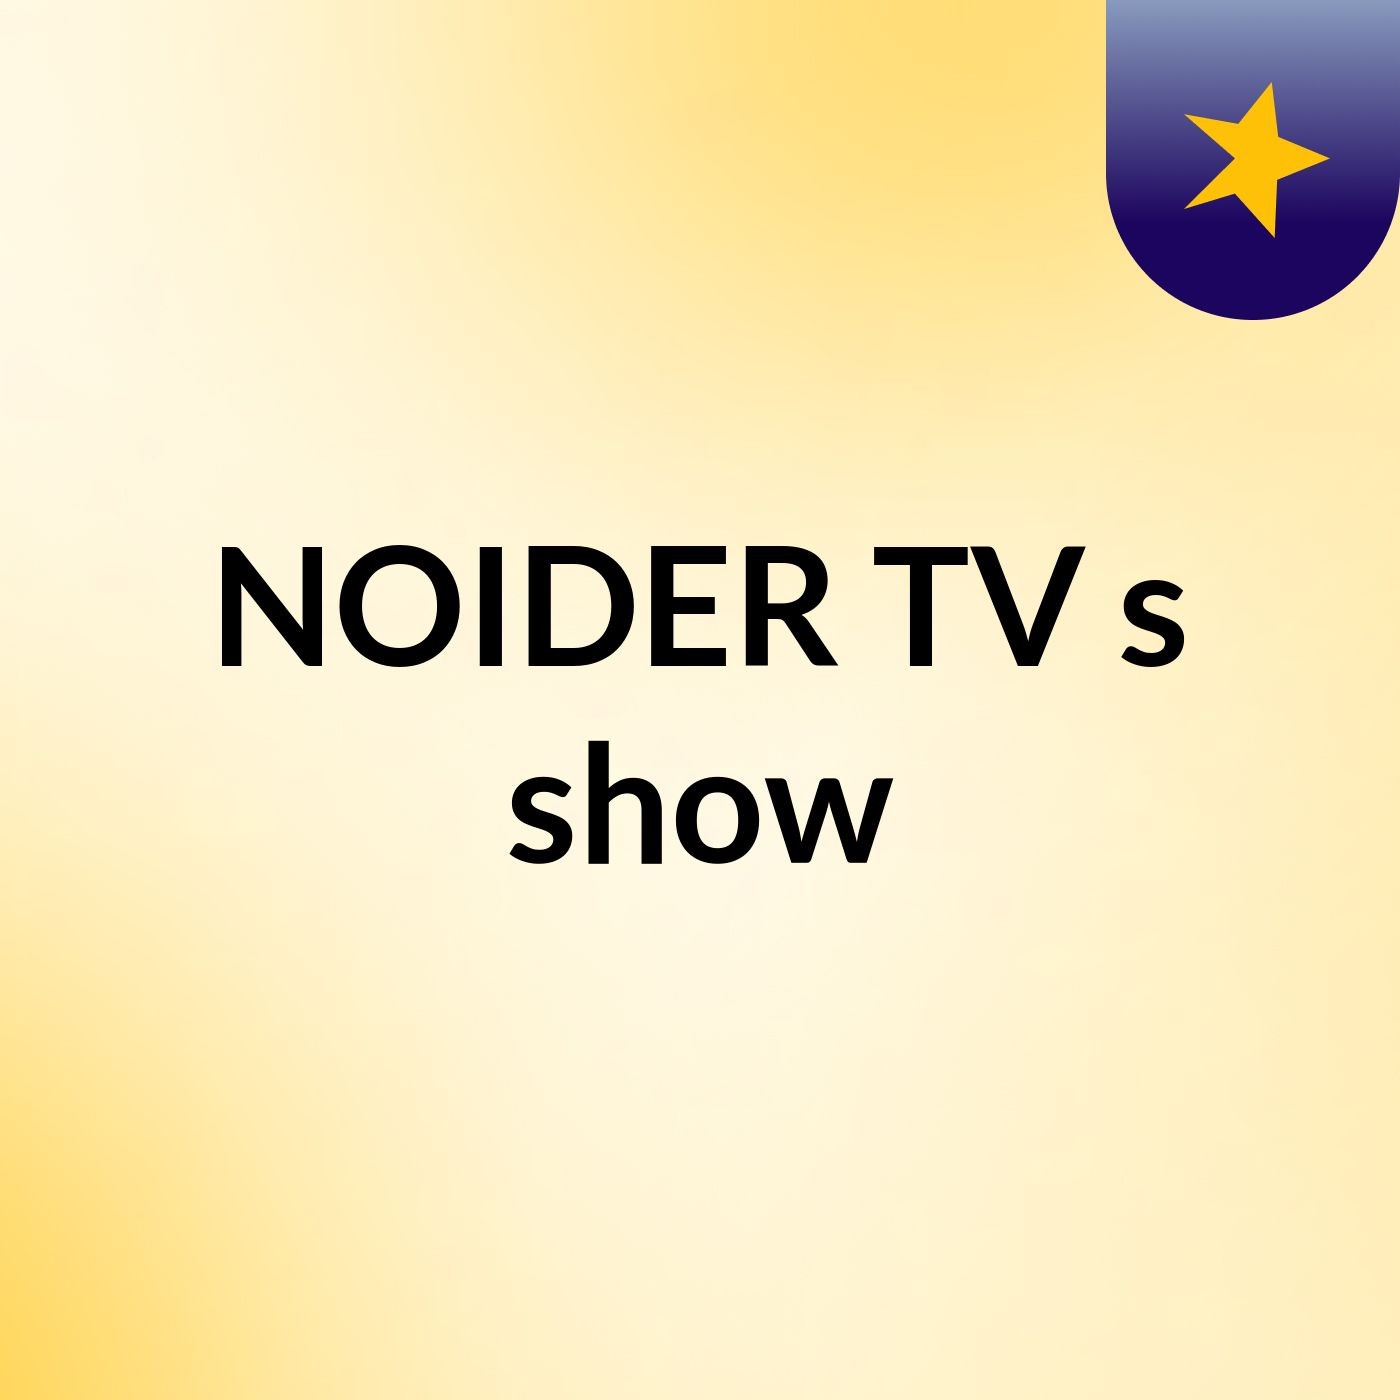 NOIDER TV's show